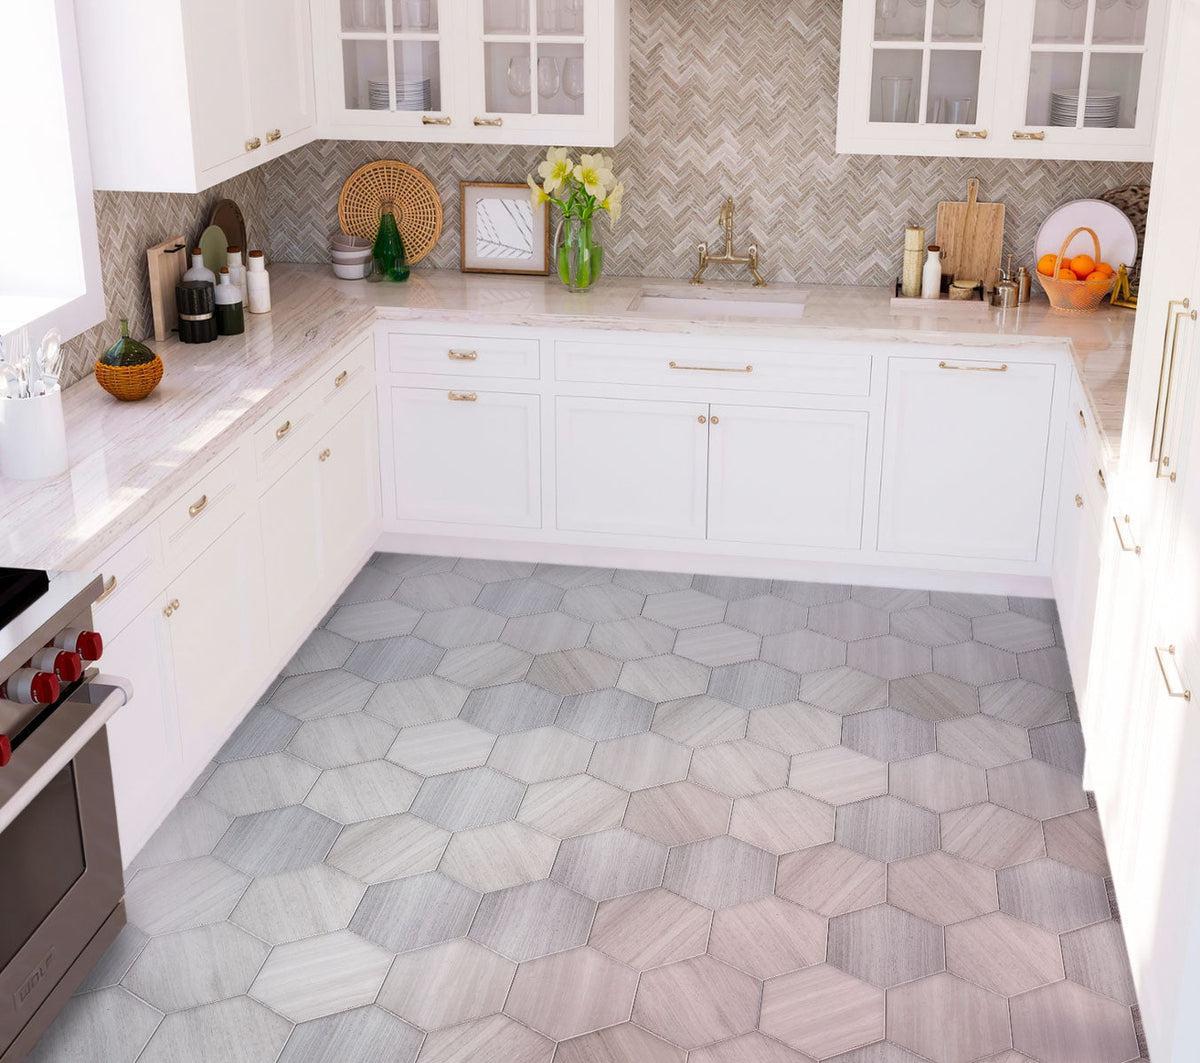 Large hexagon tile wood look kitchen flooring